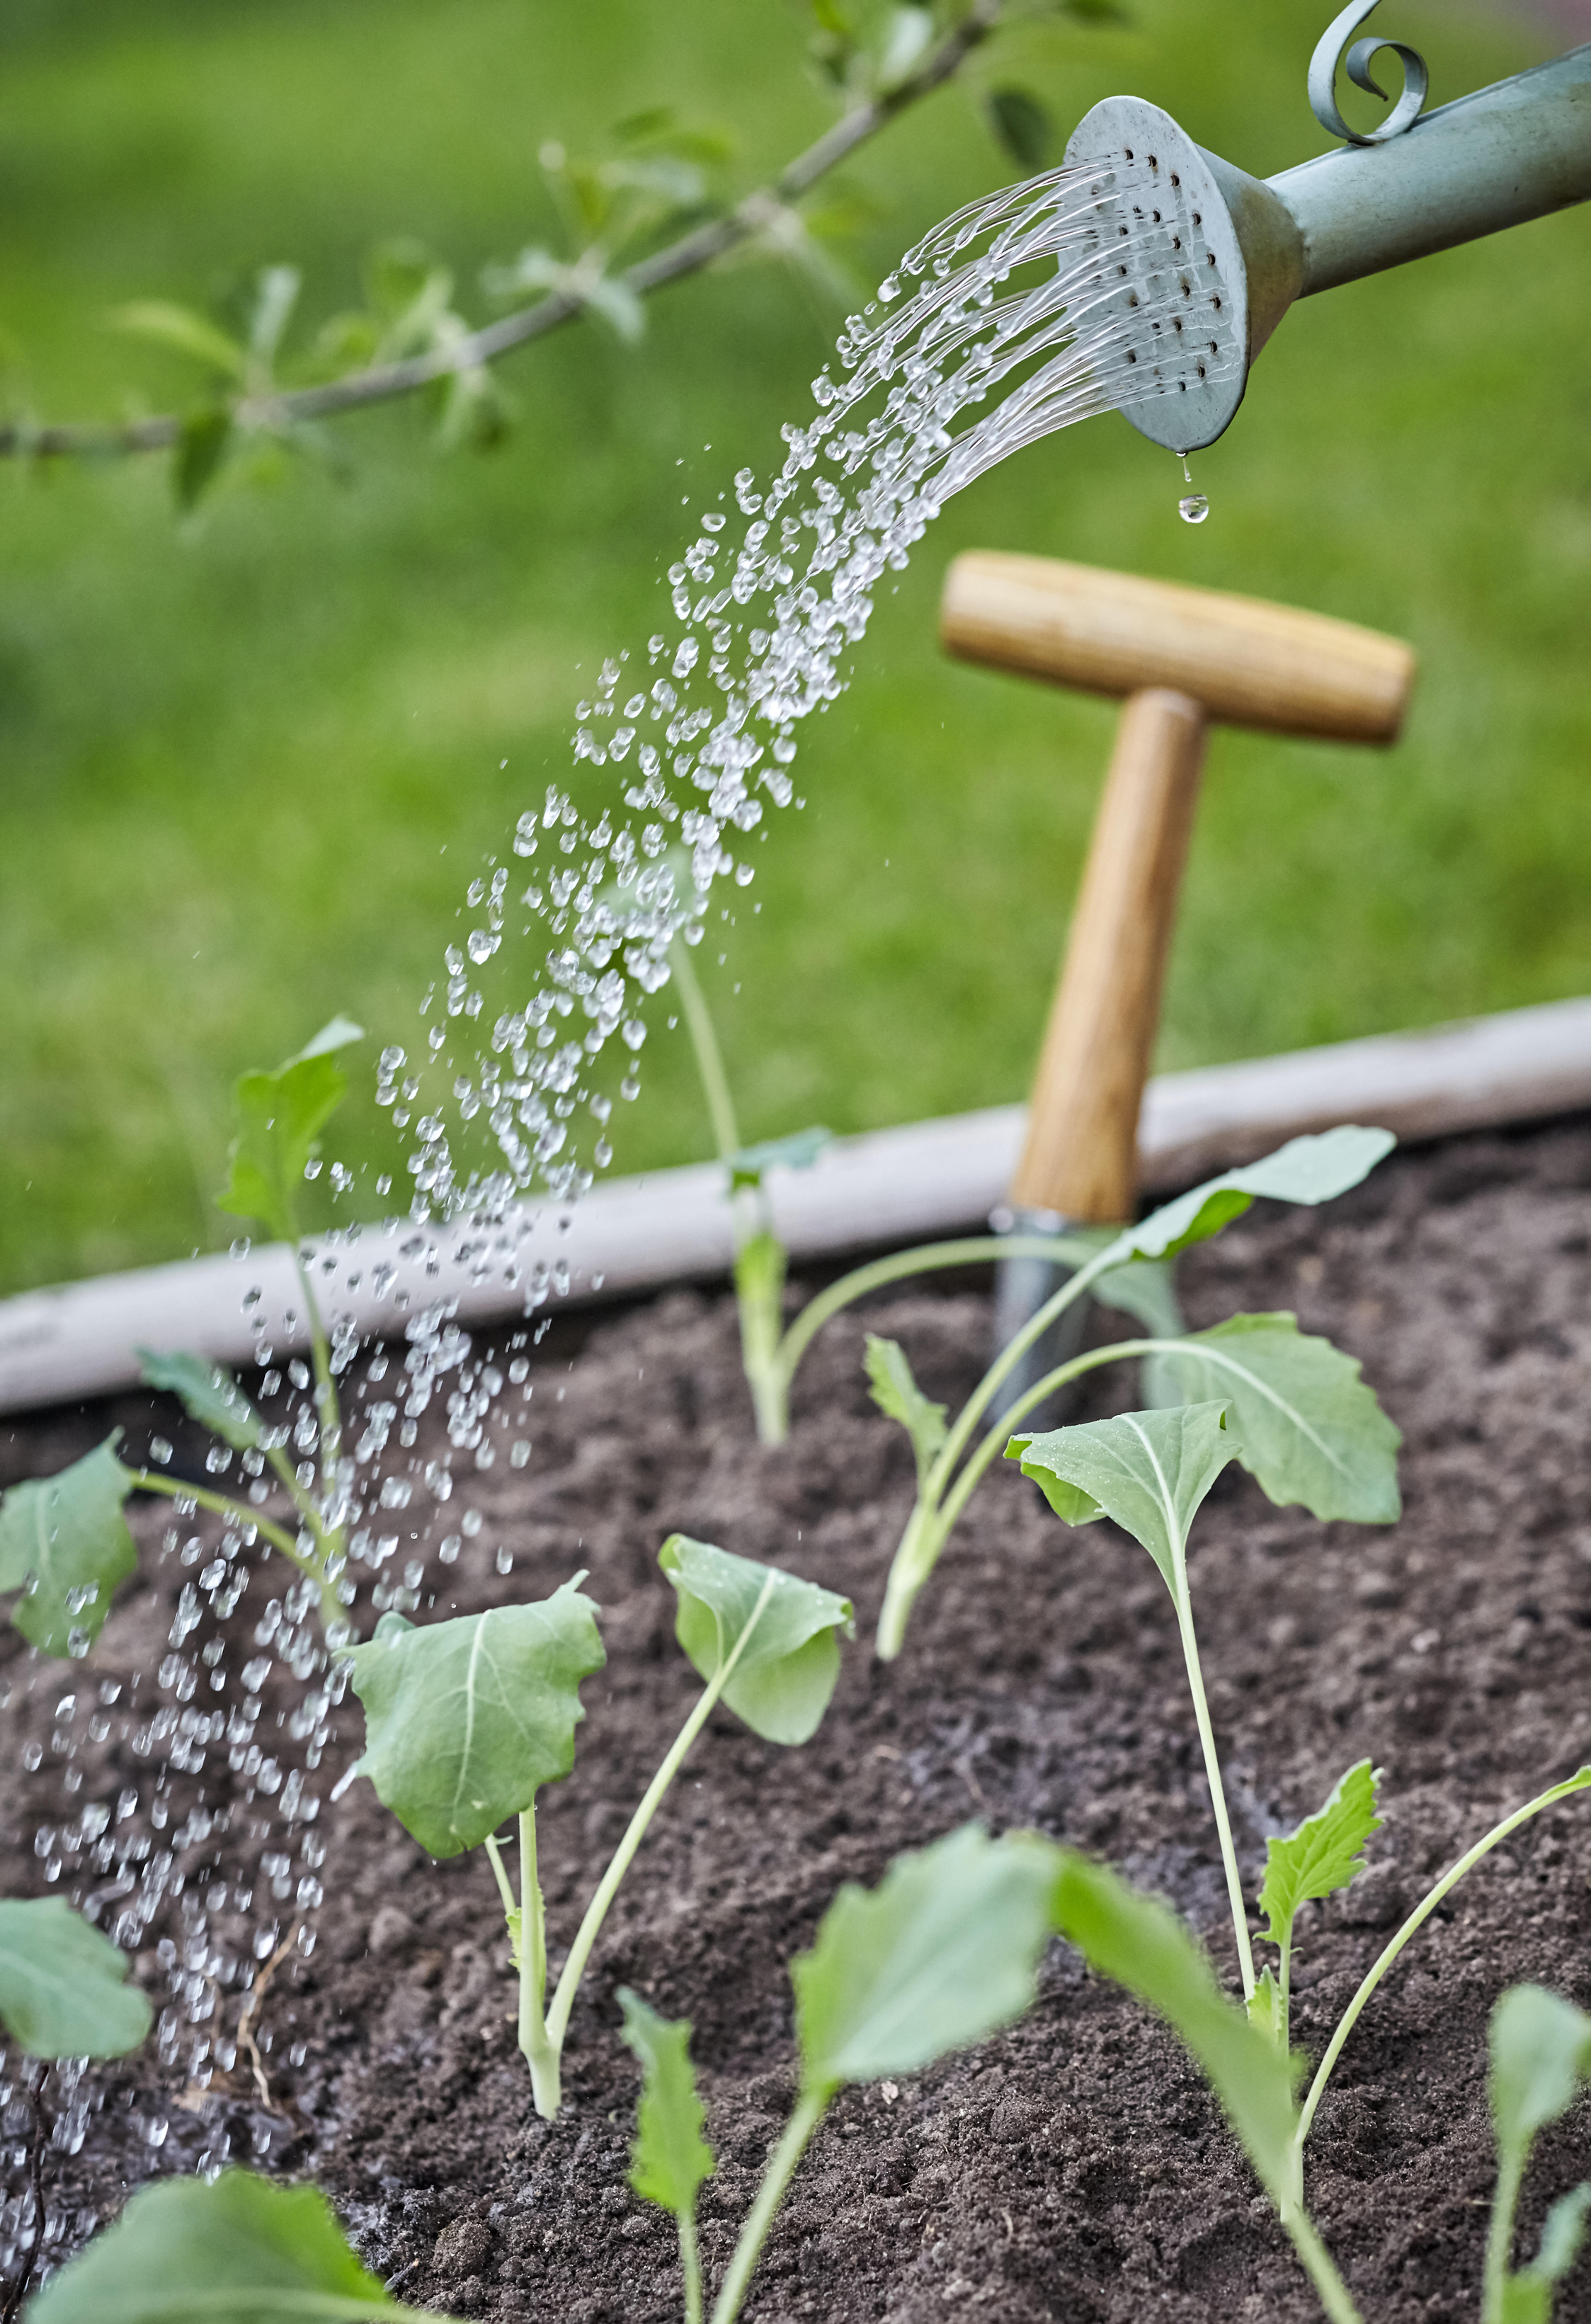 Seedlings being watered (Alamy/PA)